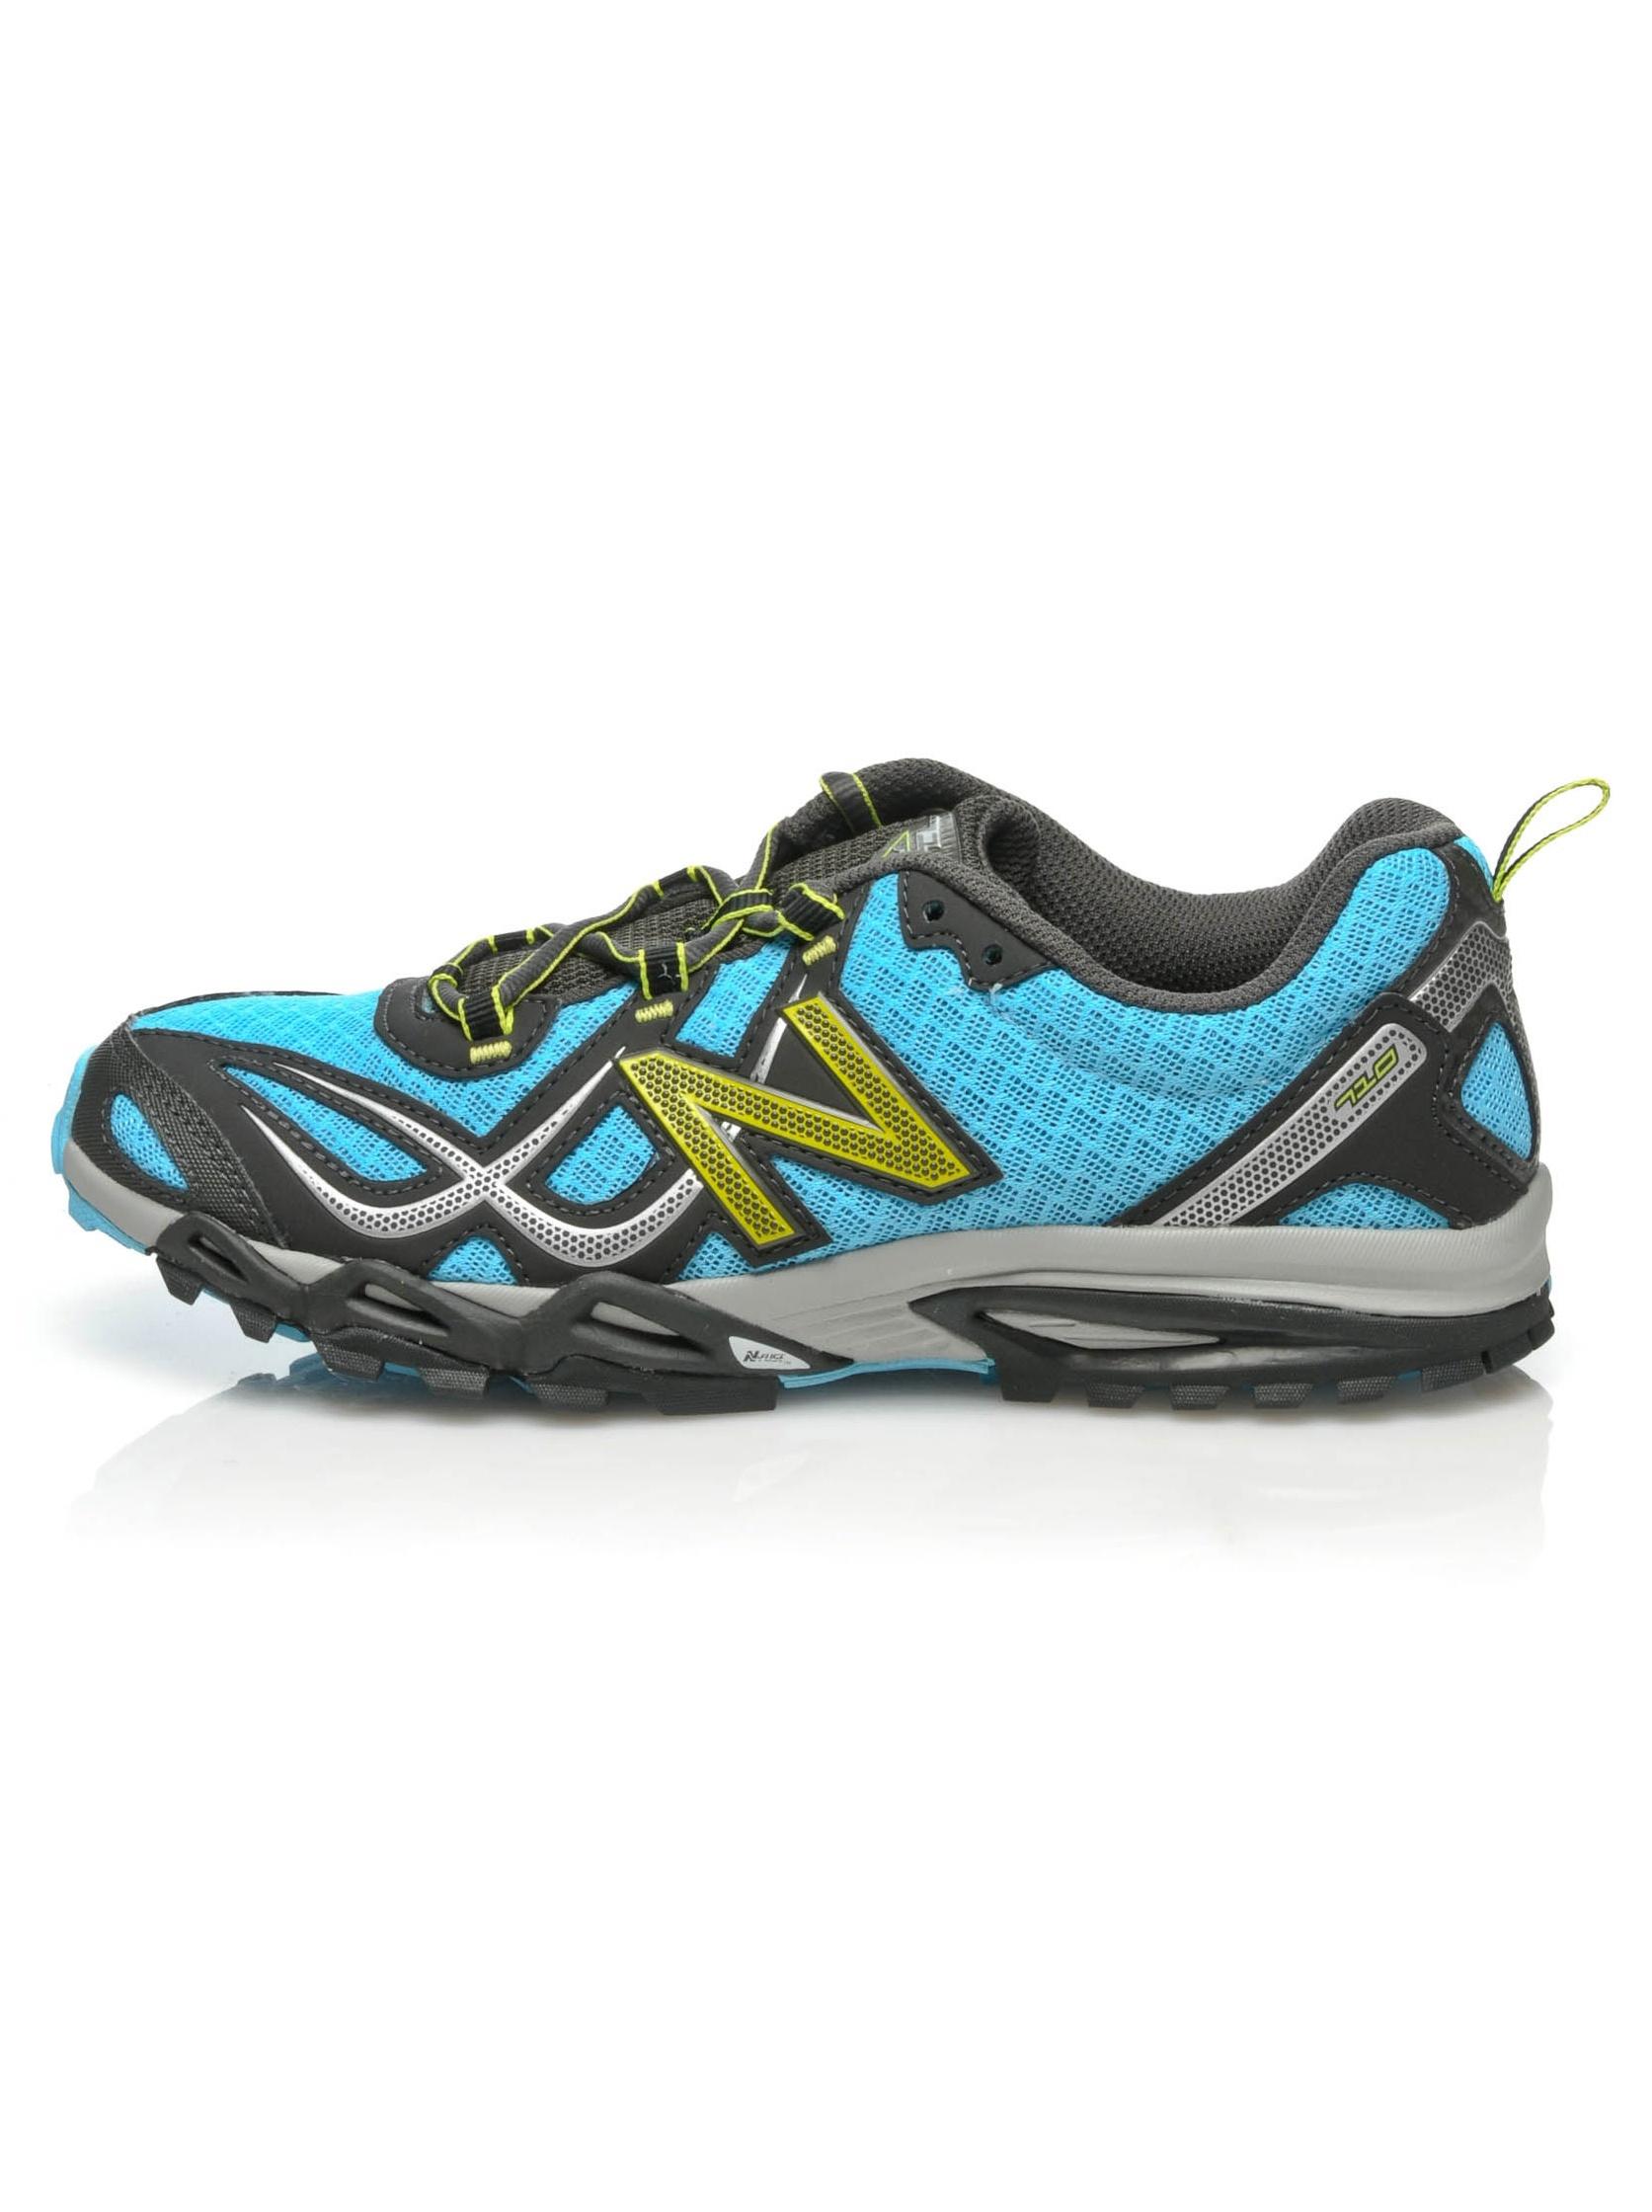 New Balance 710 V1 Trail Running Shoe in Teal/Black (Blue) | Lyst